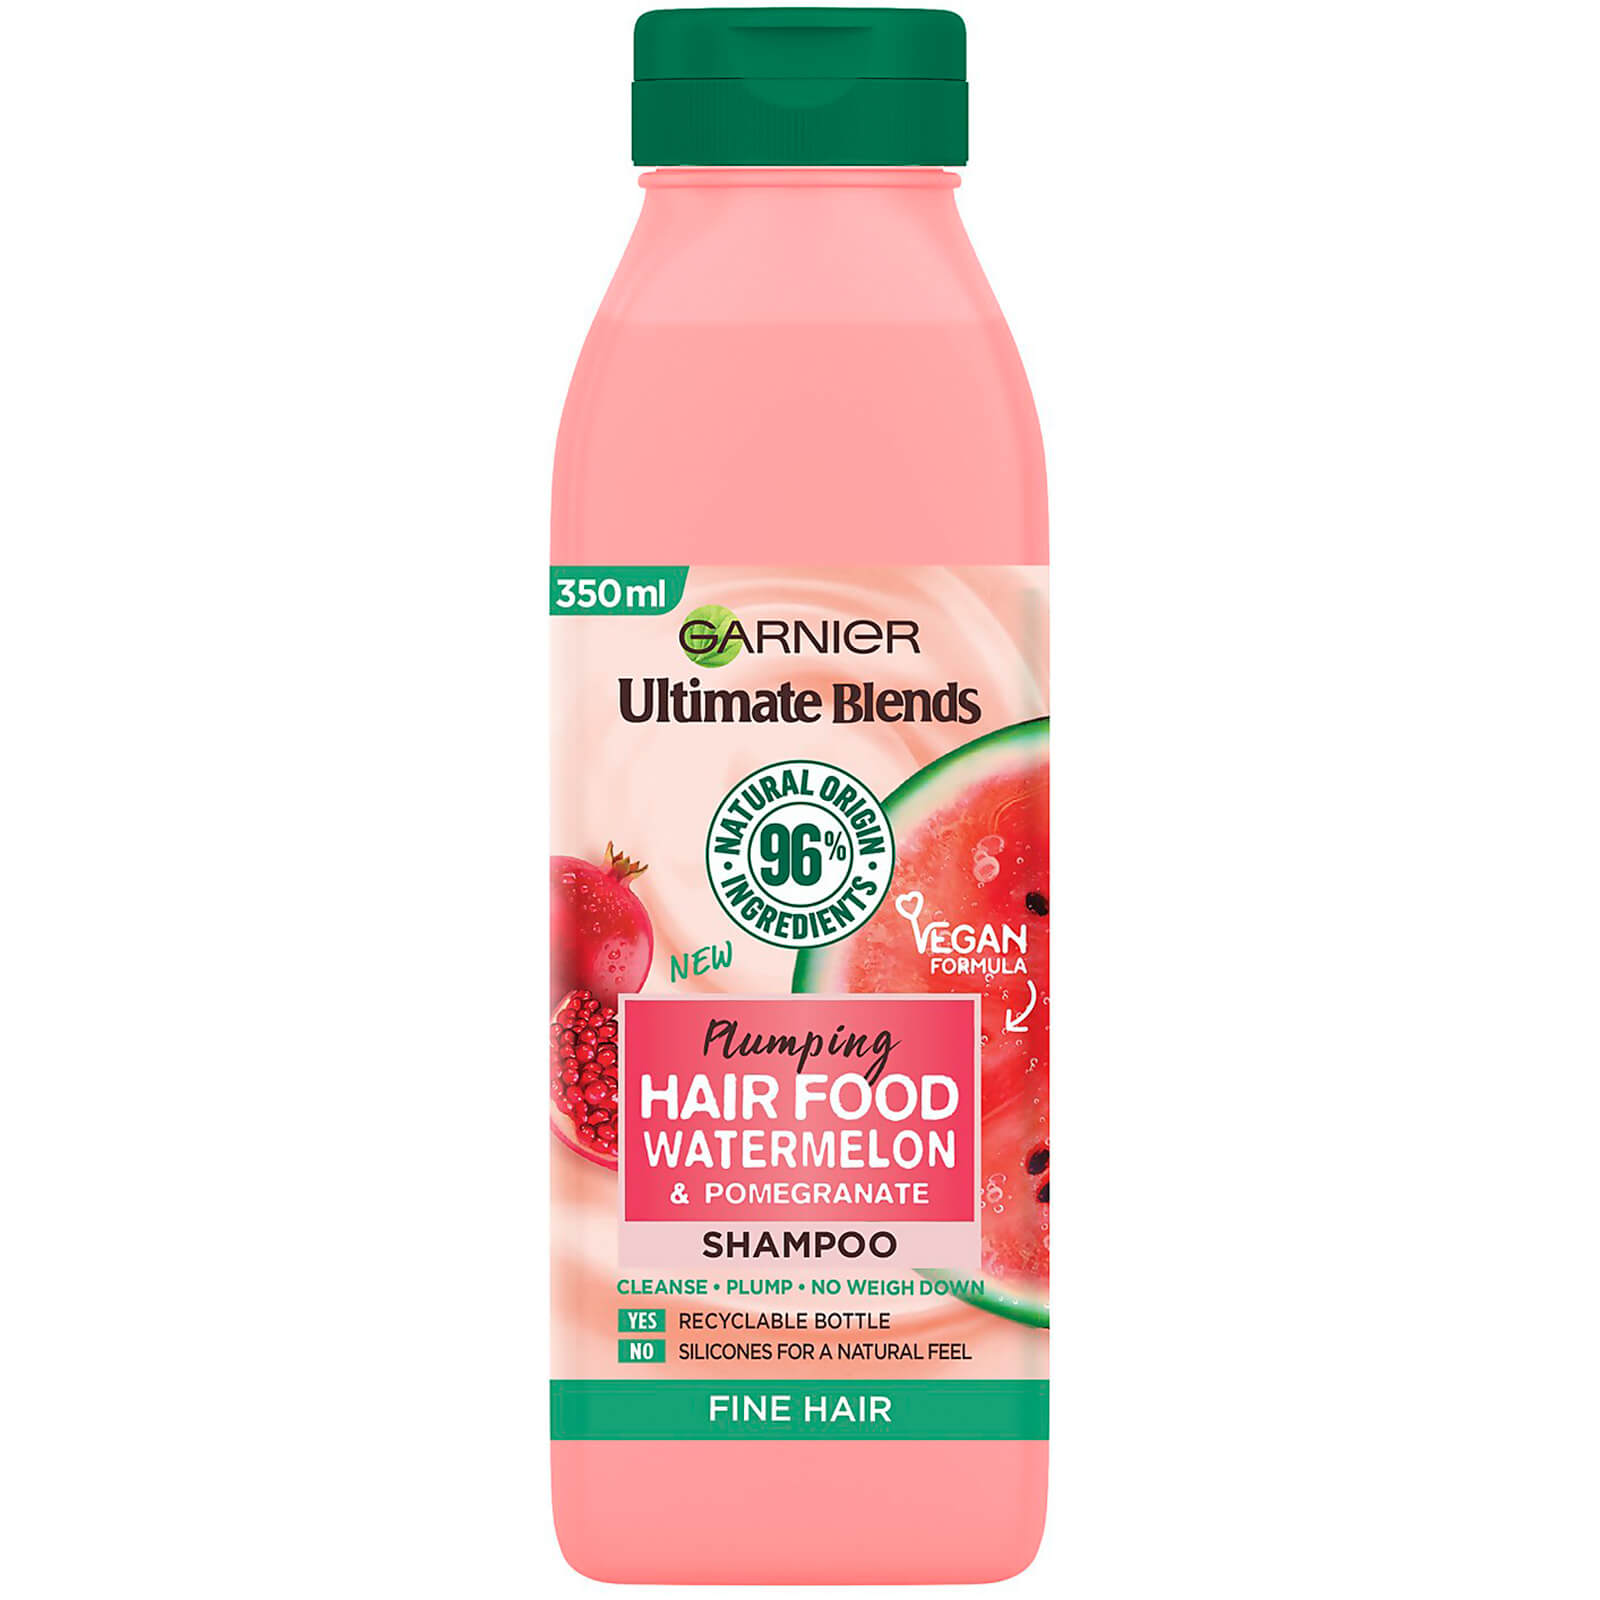 Image of Garnier Ultimate Blends Plumping Hair Food Watermelon Shampoo 350ml